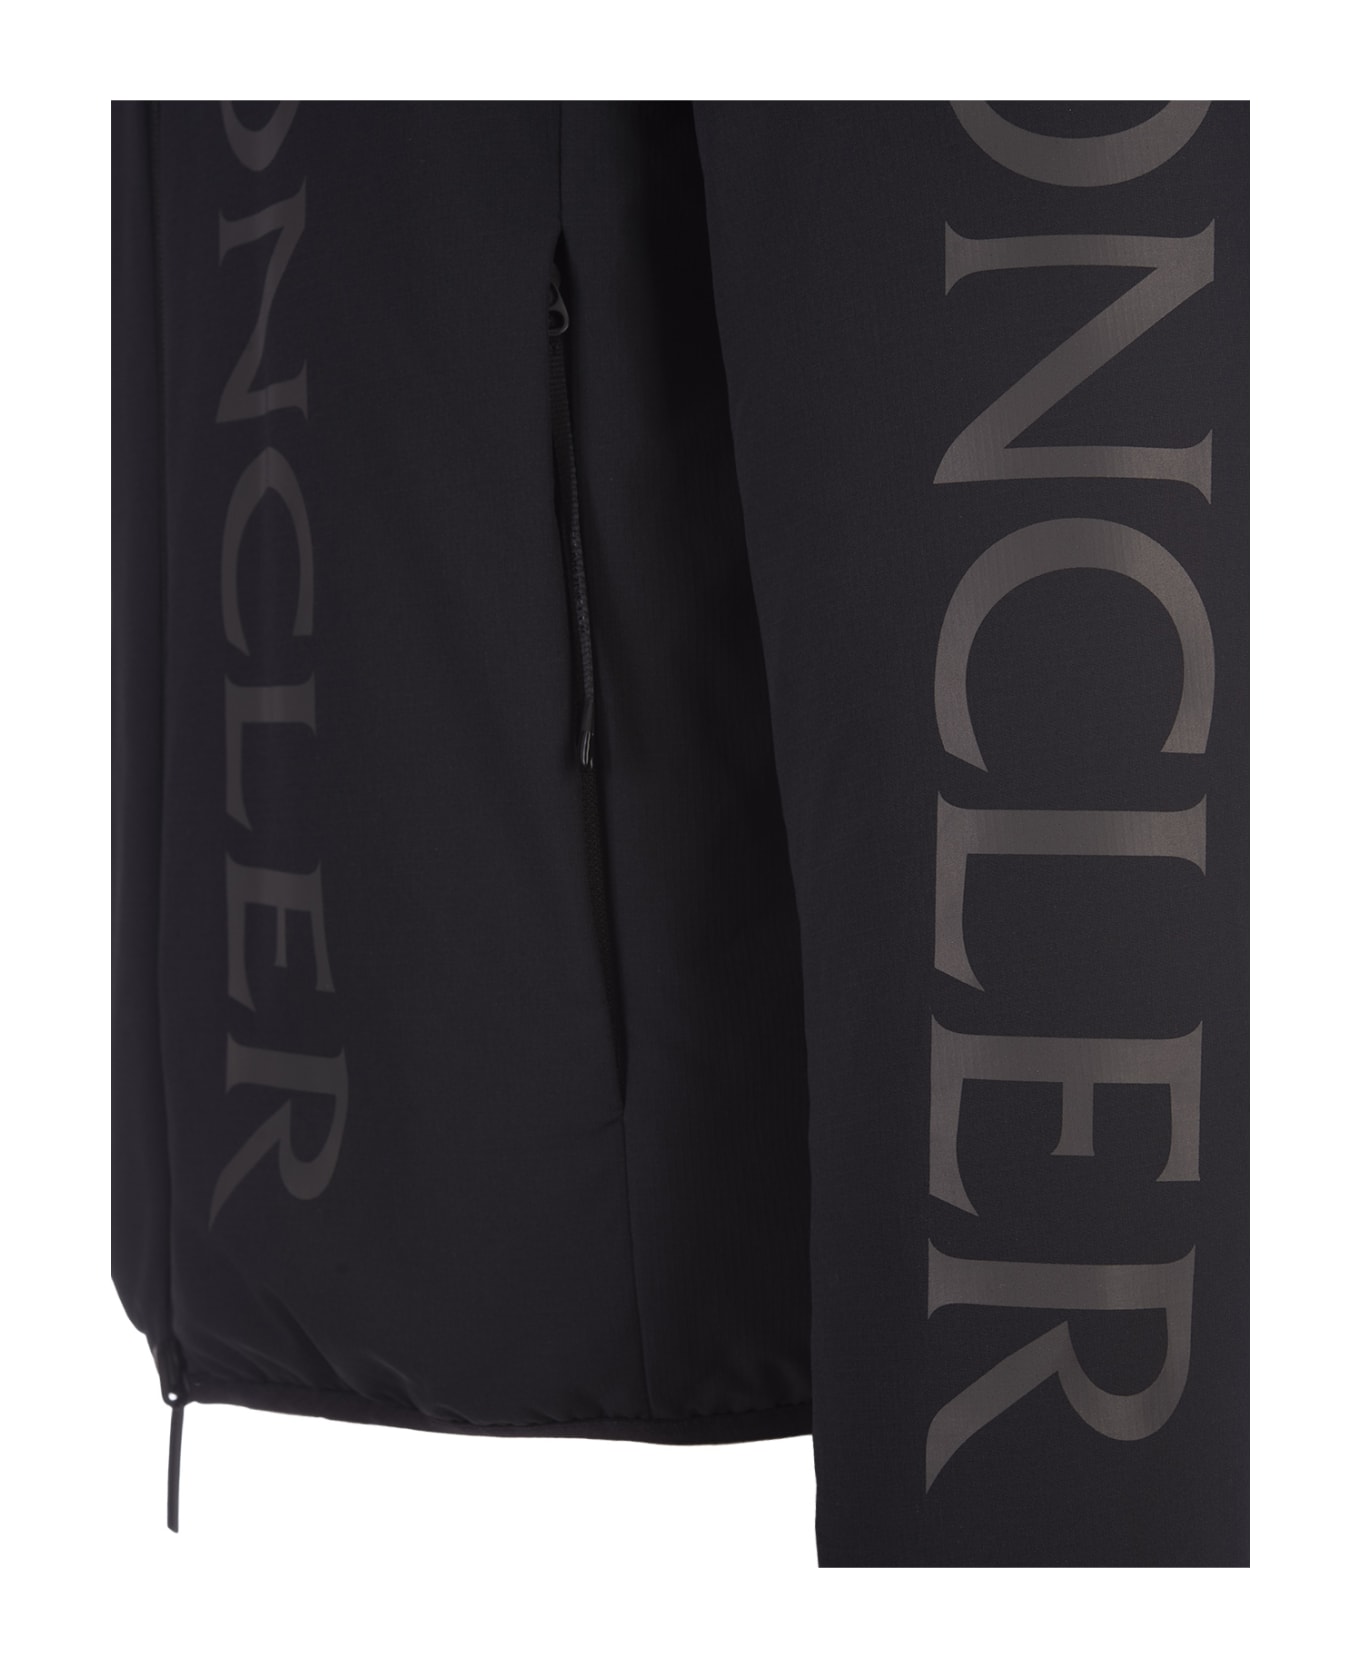 Moncler Black Ponset Reversible Down Jacket - Black